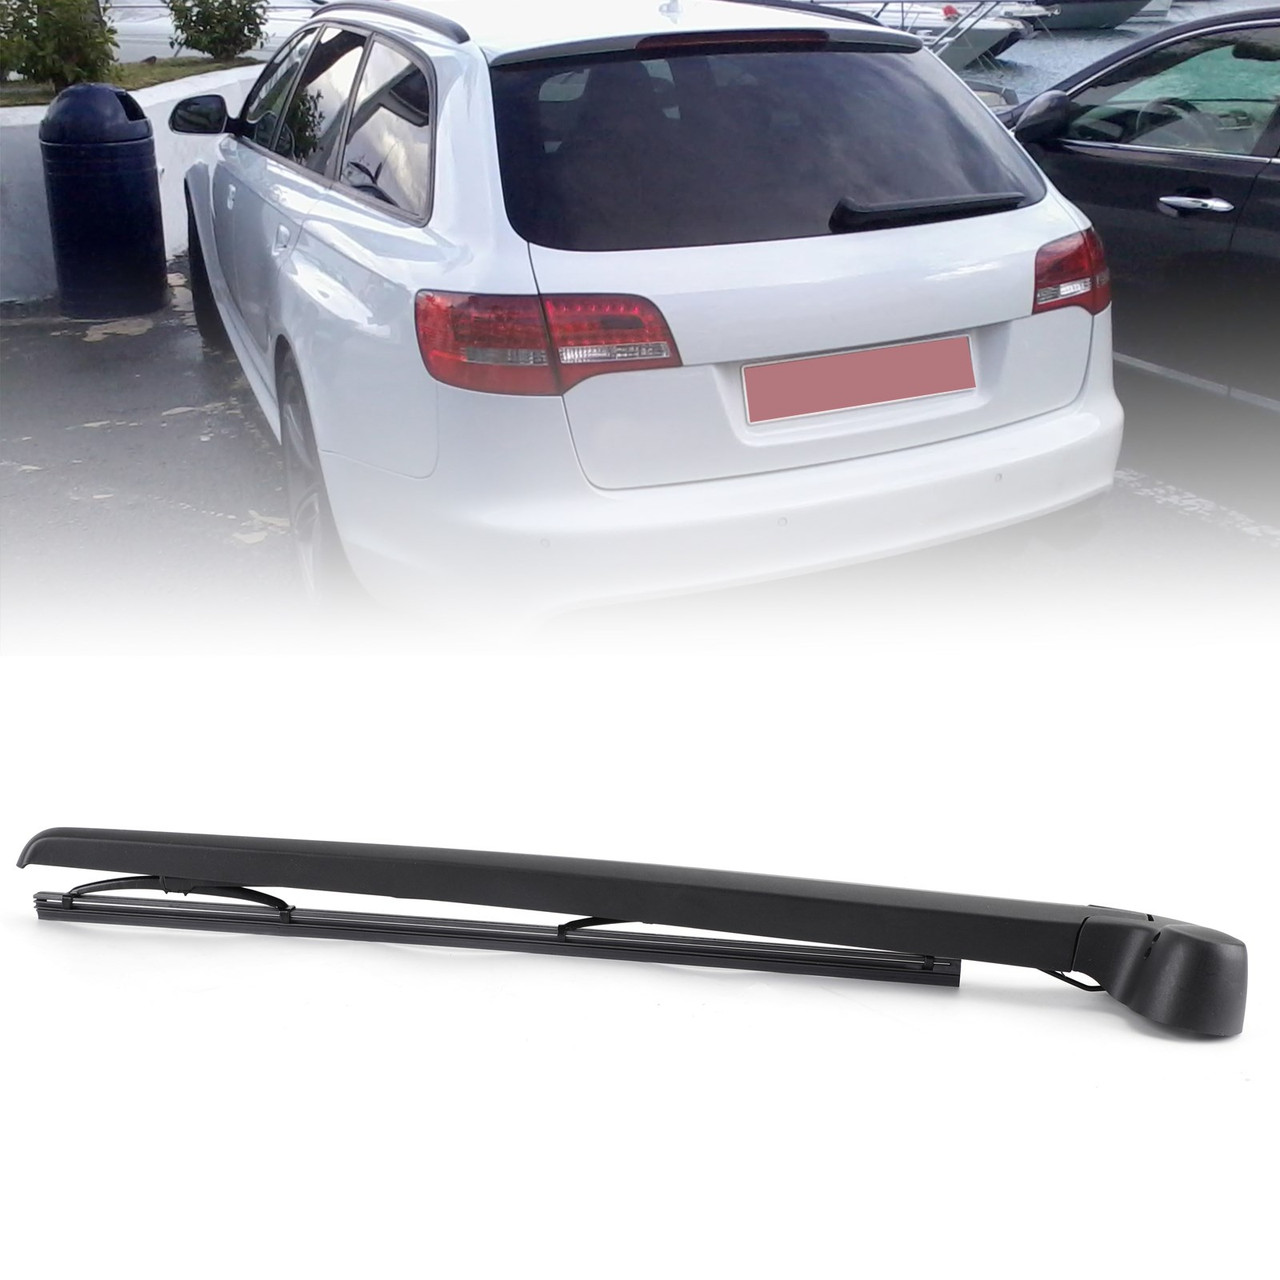 Rear Window Windshield Wiper Arm Blade Fits For Audi A6 Allroad 2006-2011 Audi A6 Avant 2005-2011 Black